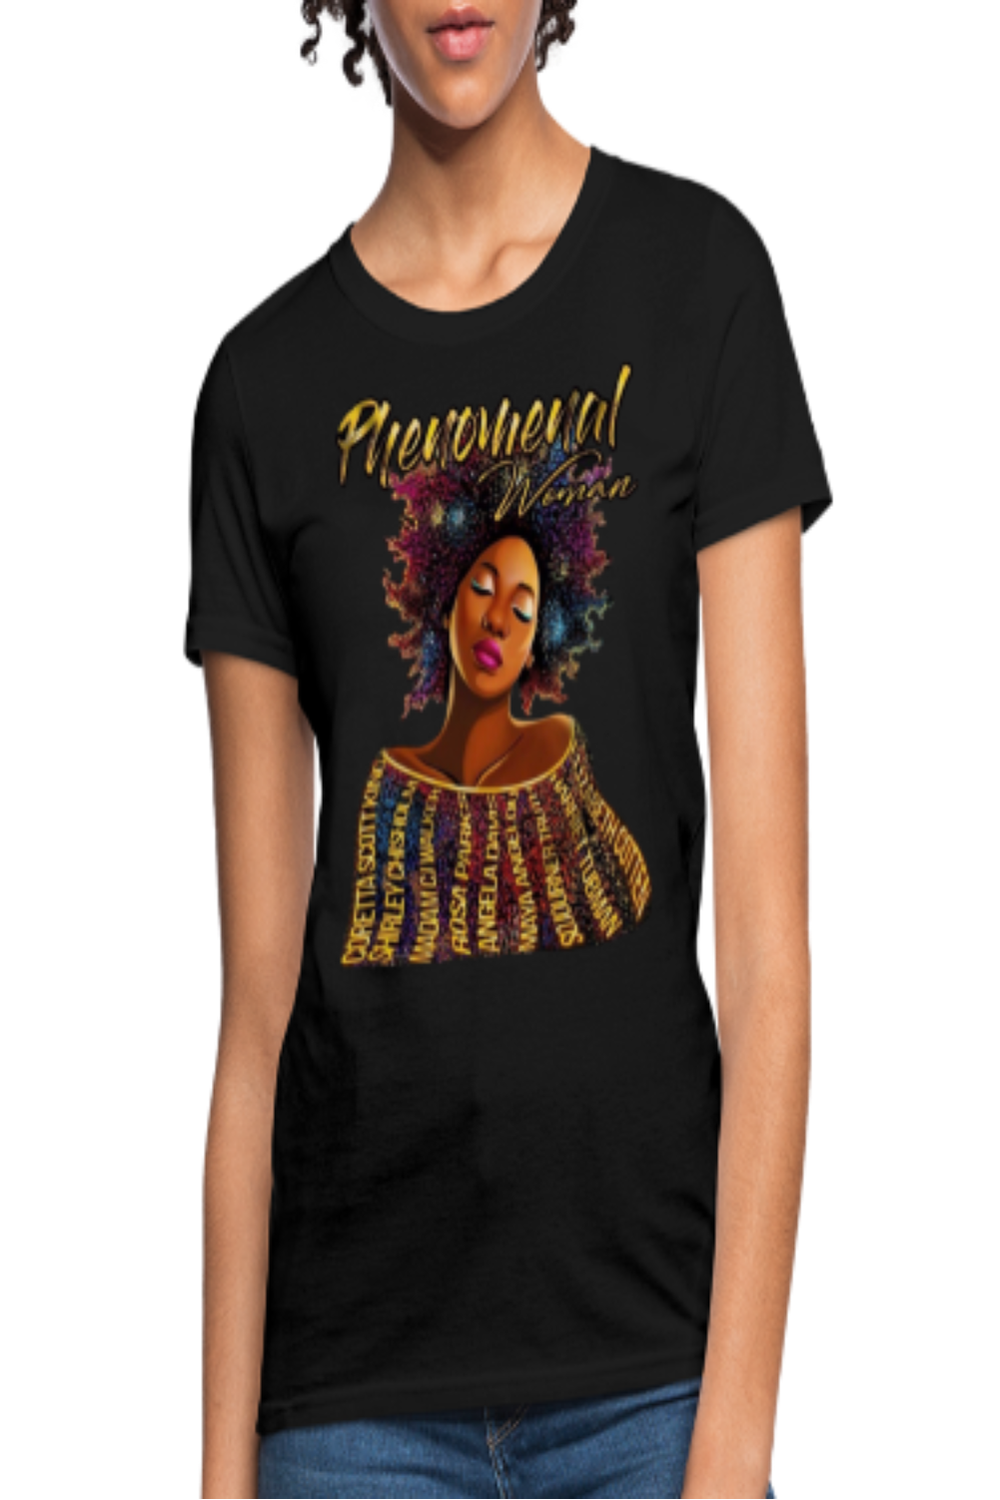 African American Women's Phenomenal Woman Short Sleeve T-Shirt - black - NicholesGifts.online